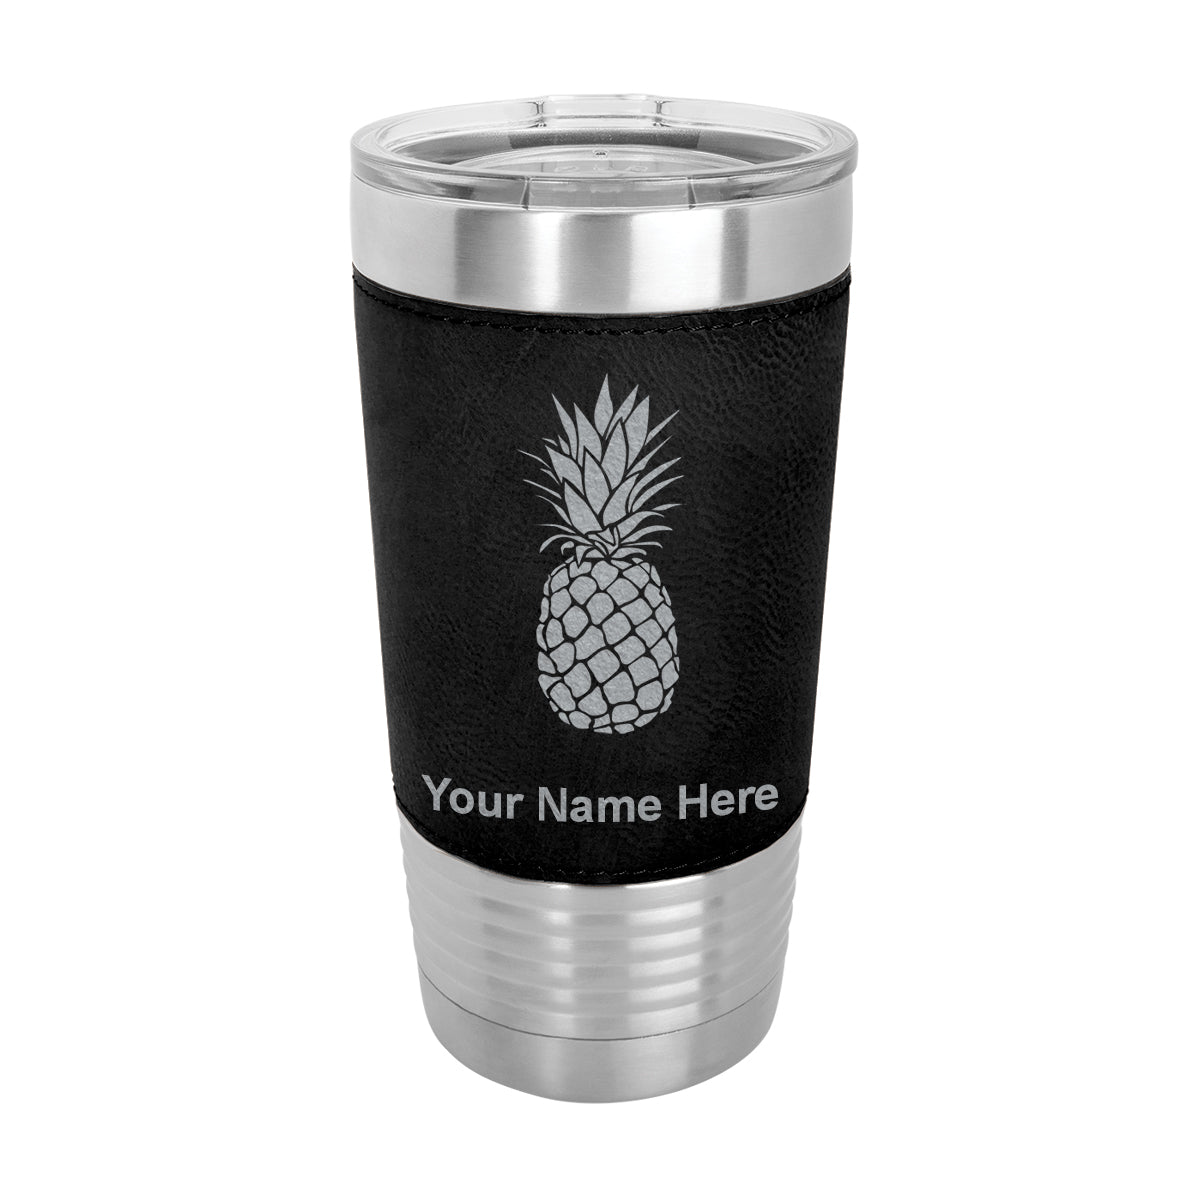 20oz Faux Leather Tumbler Mug, Pineapple, Personalized Engraving Included - LaserGram Custom Engraved Gifts